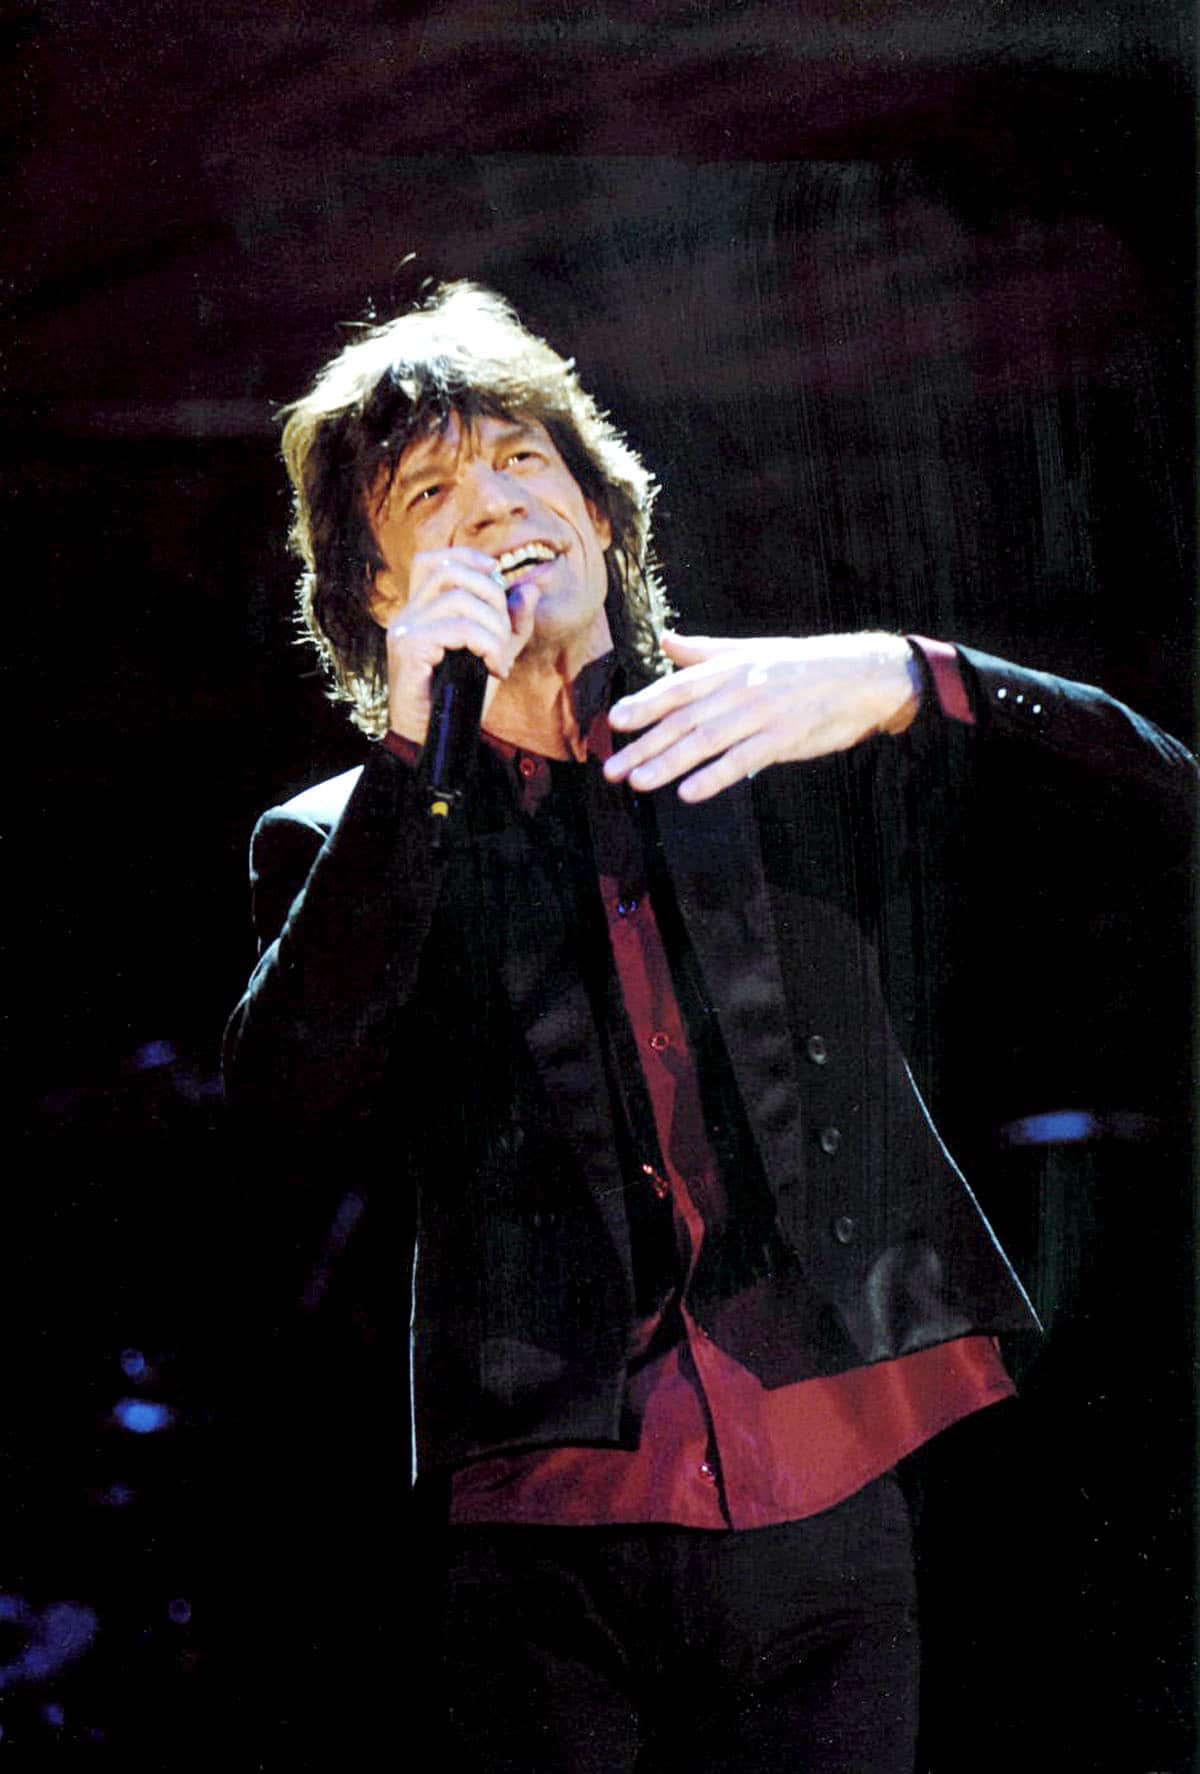 SHINE A LIGHT, Mick Jagger, 2007